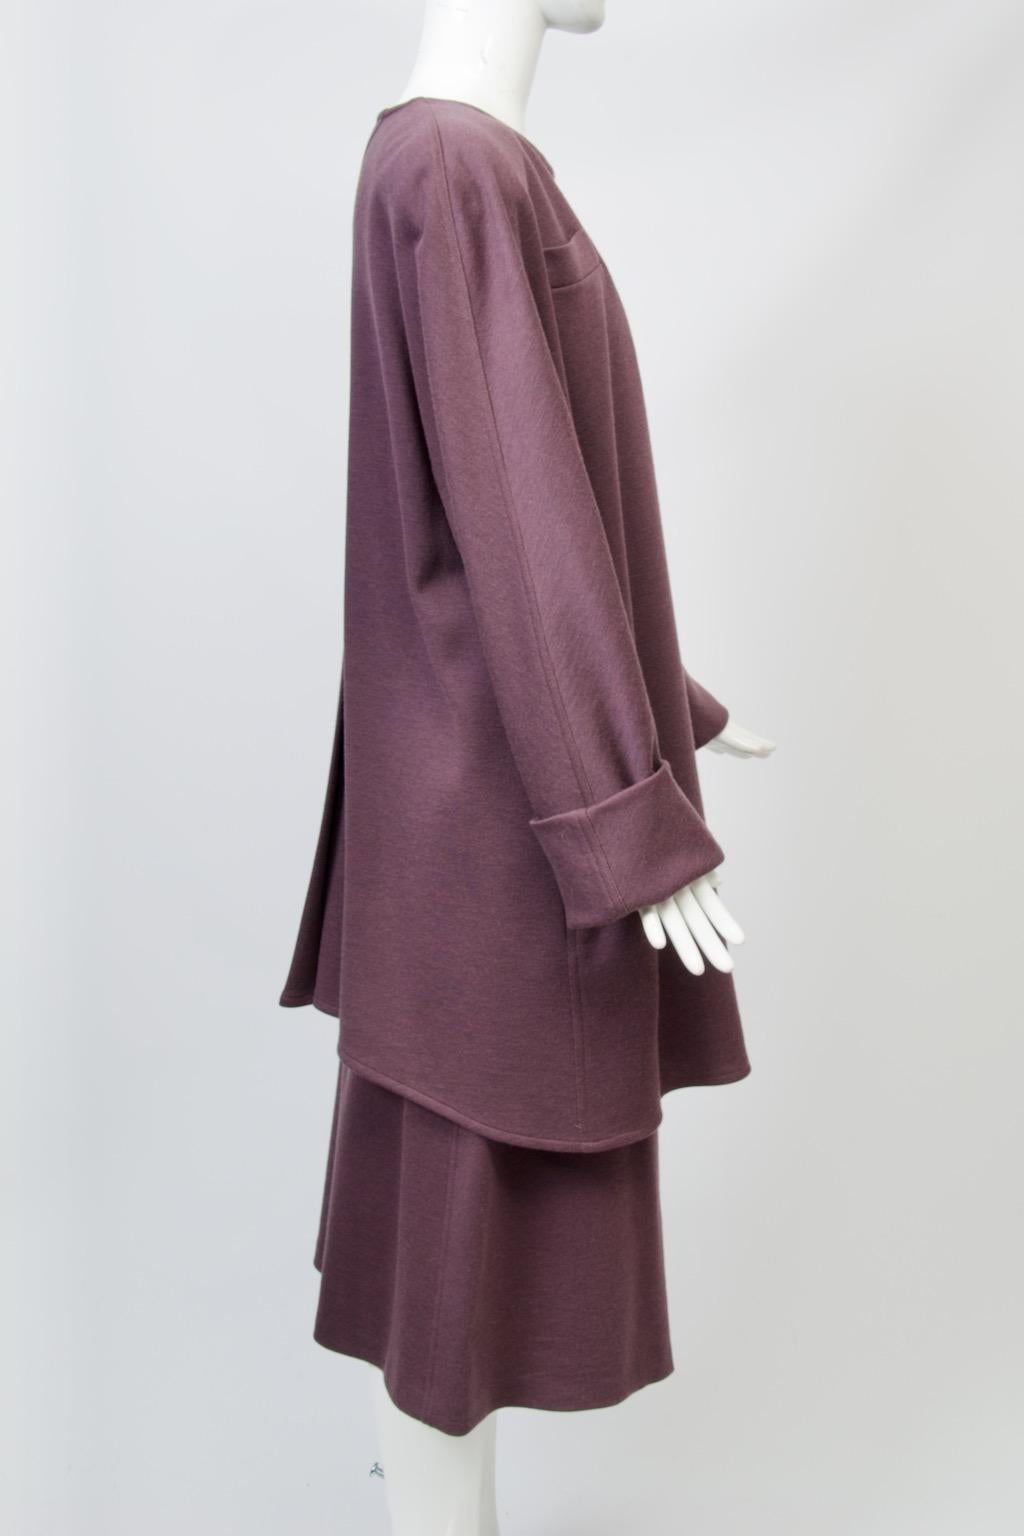 Sonia Rykiel Plum Knit Suit  For Sale 1